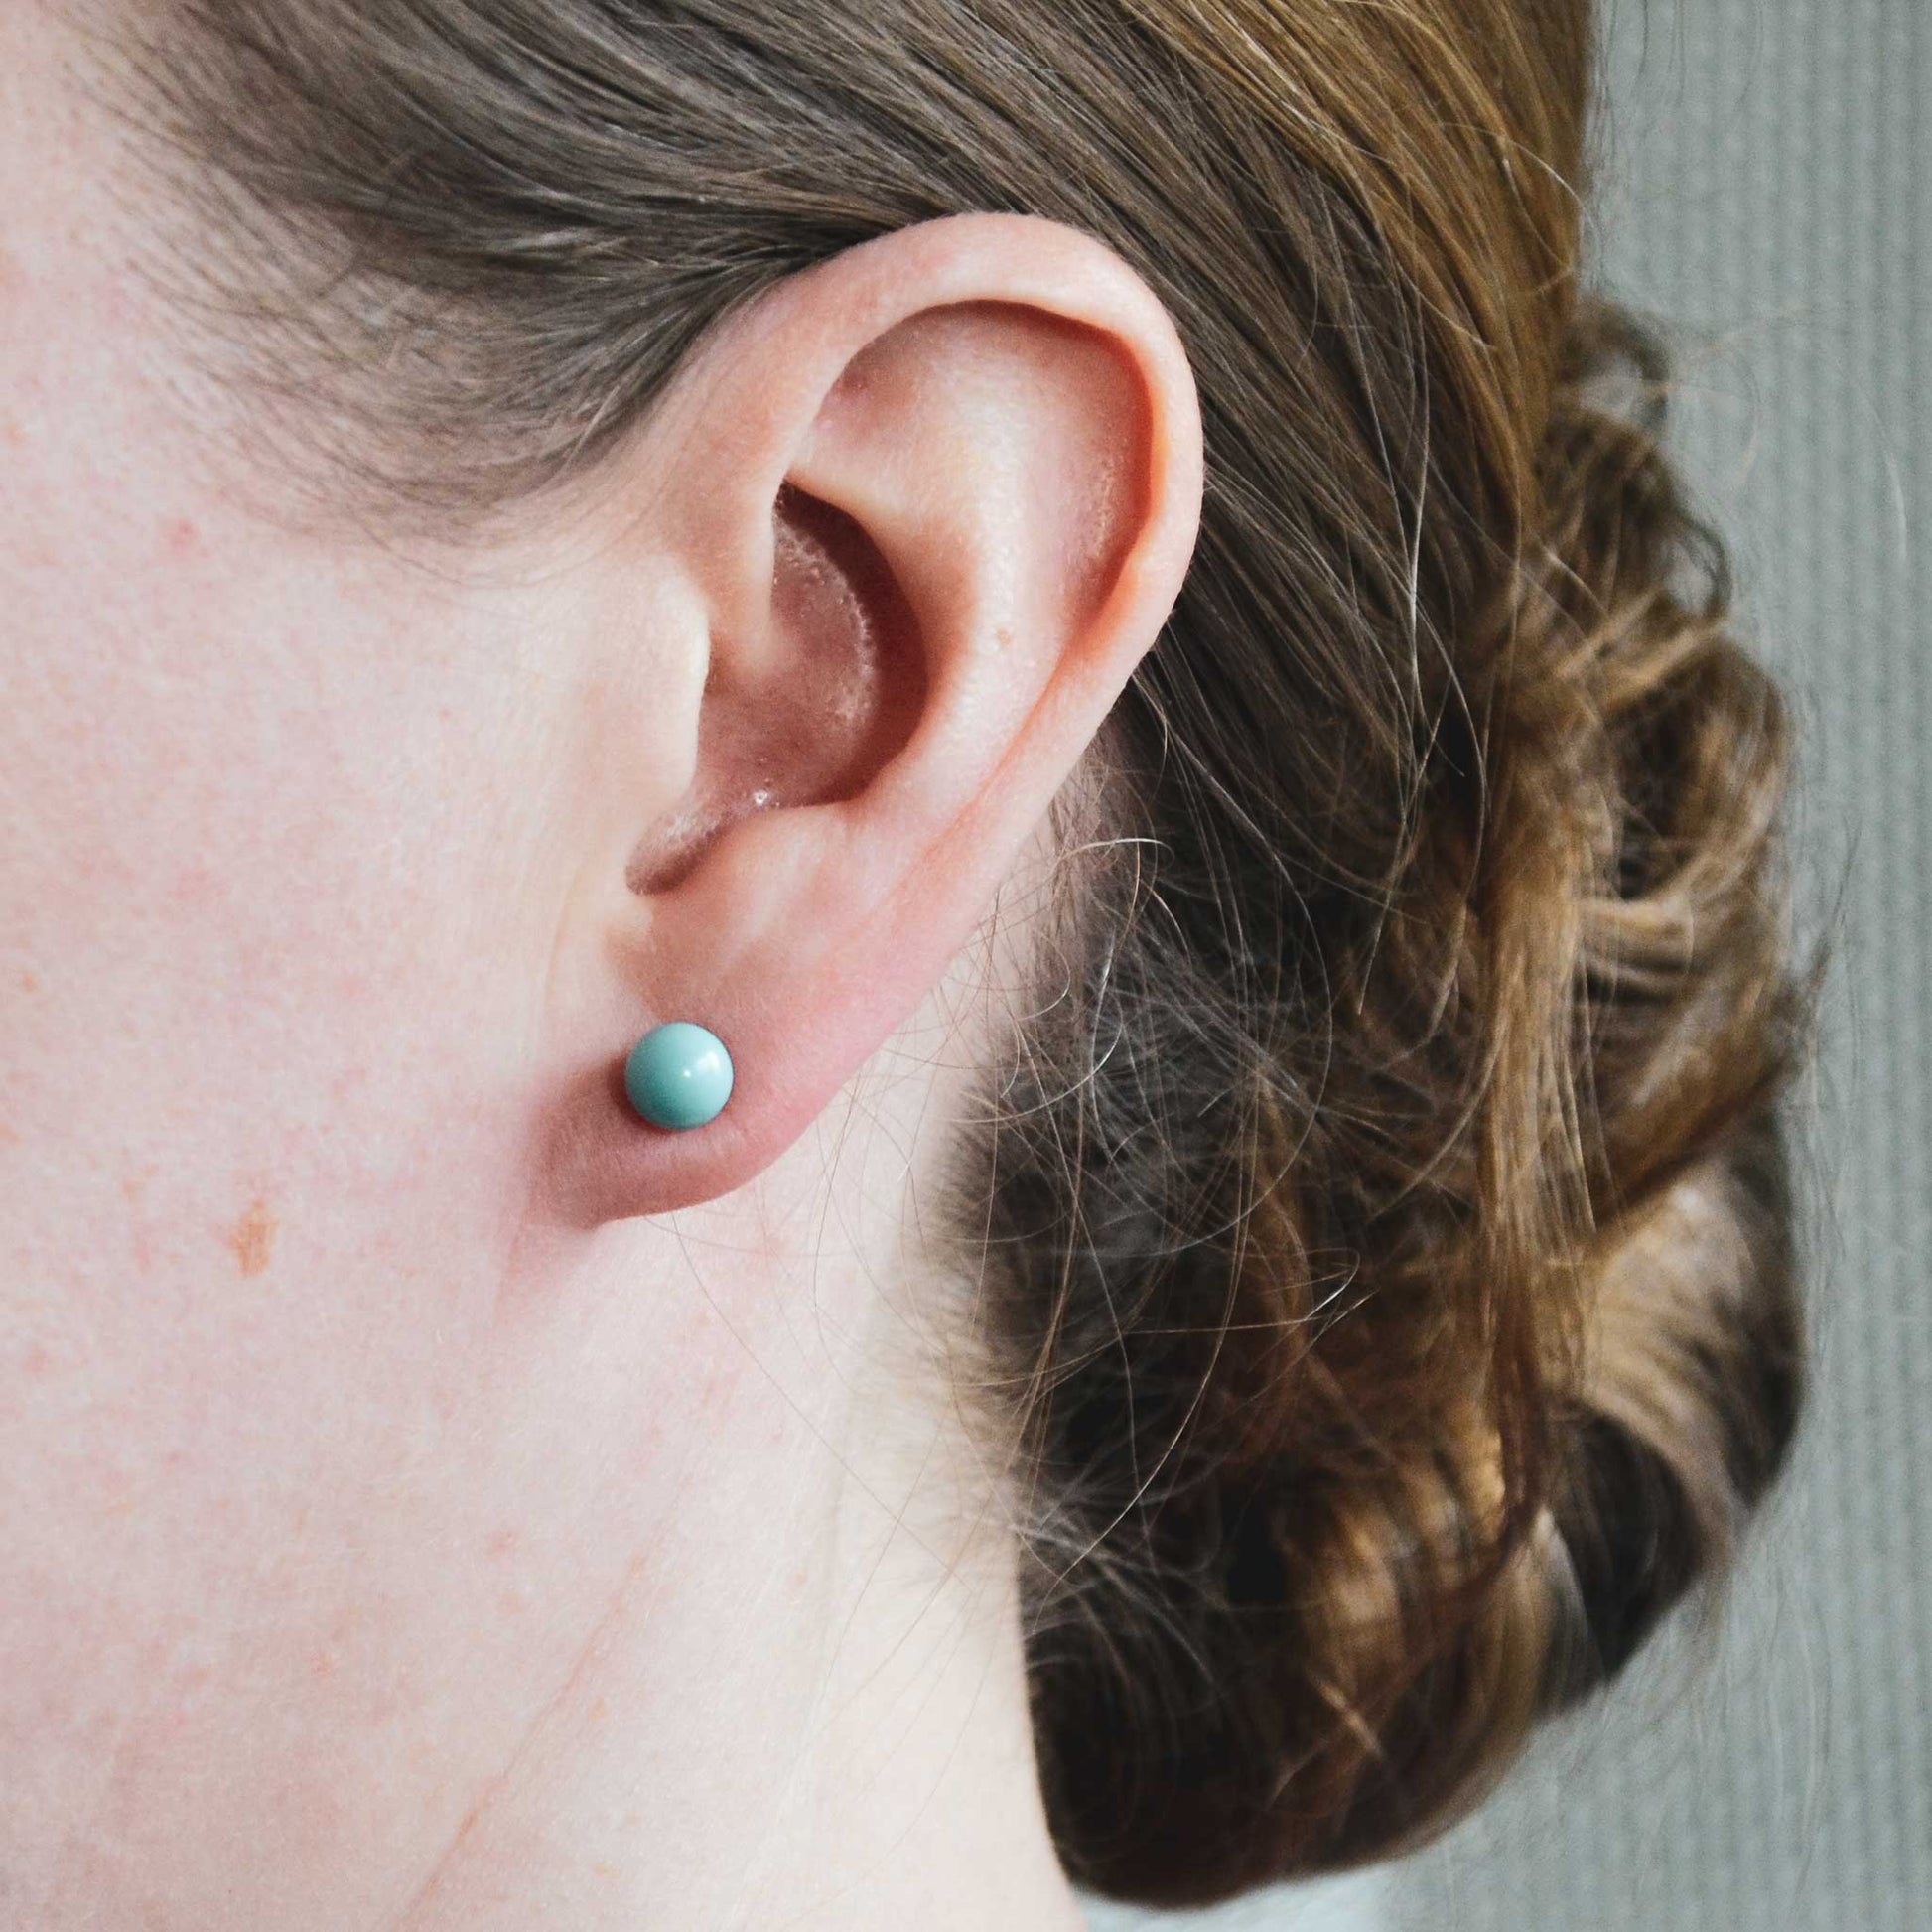 Woman wearing round Turquoise ball stud earring in earlobe